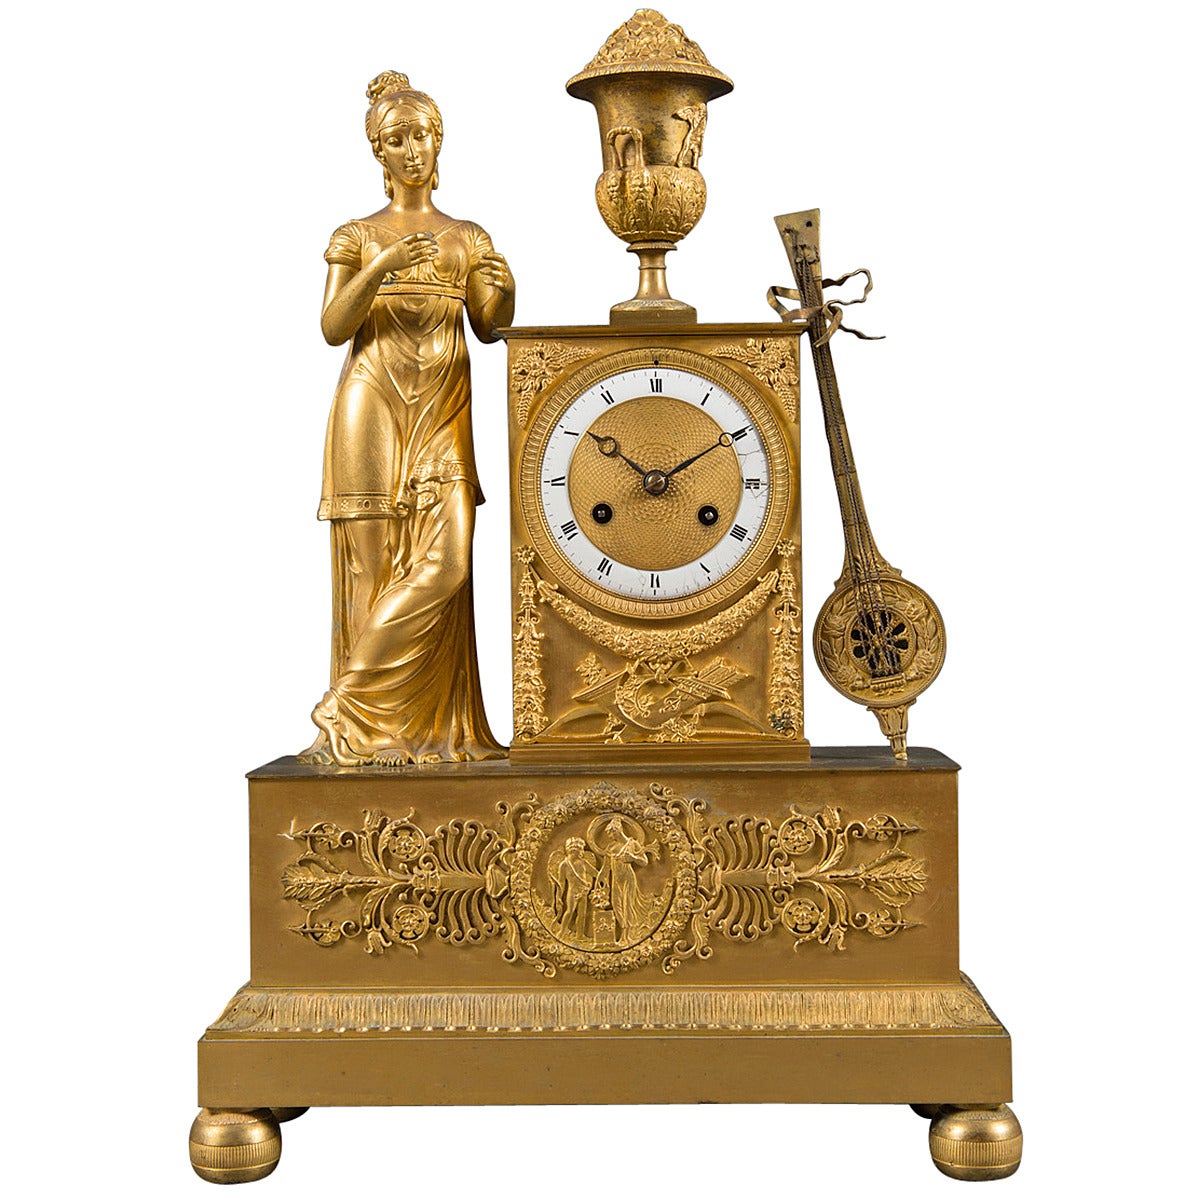 A French Antique Empire Gilt Bronze Silk Thread Mantel Clock, Circa 1820